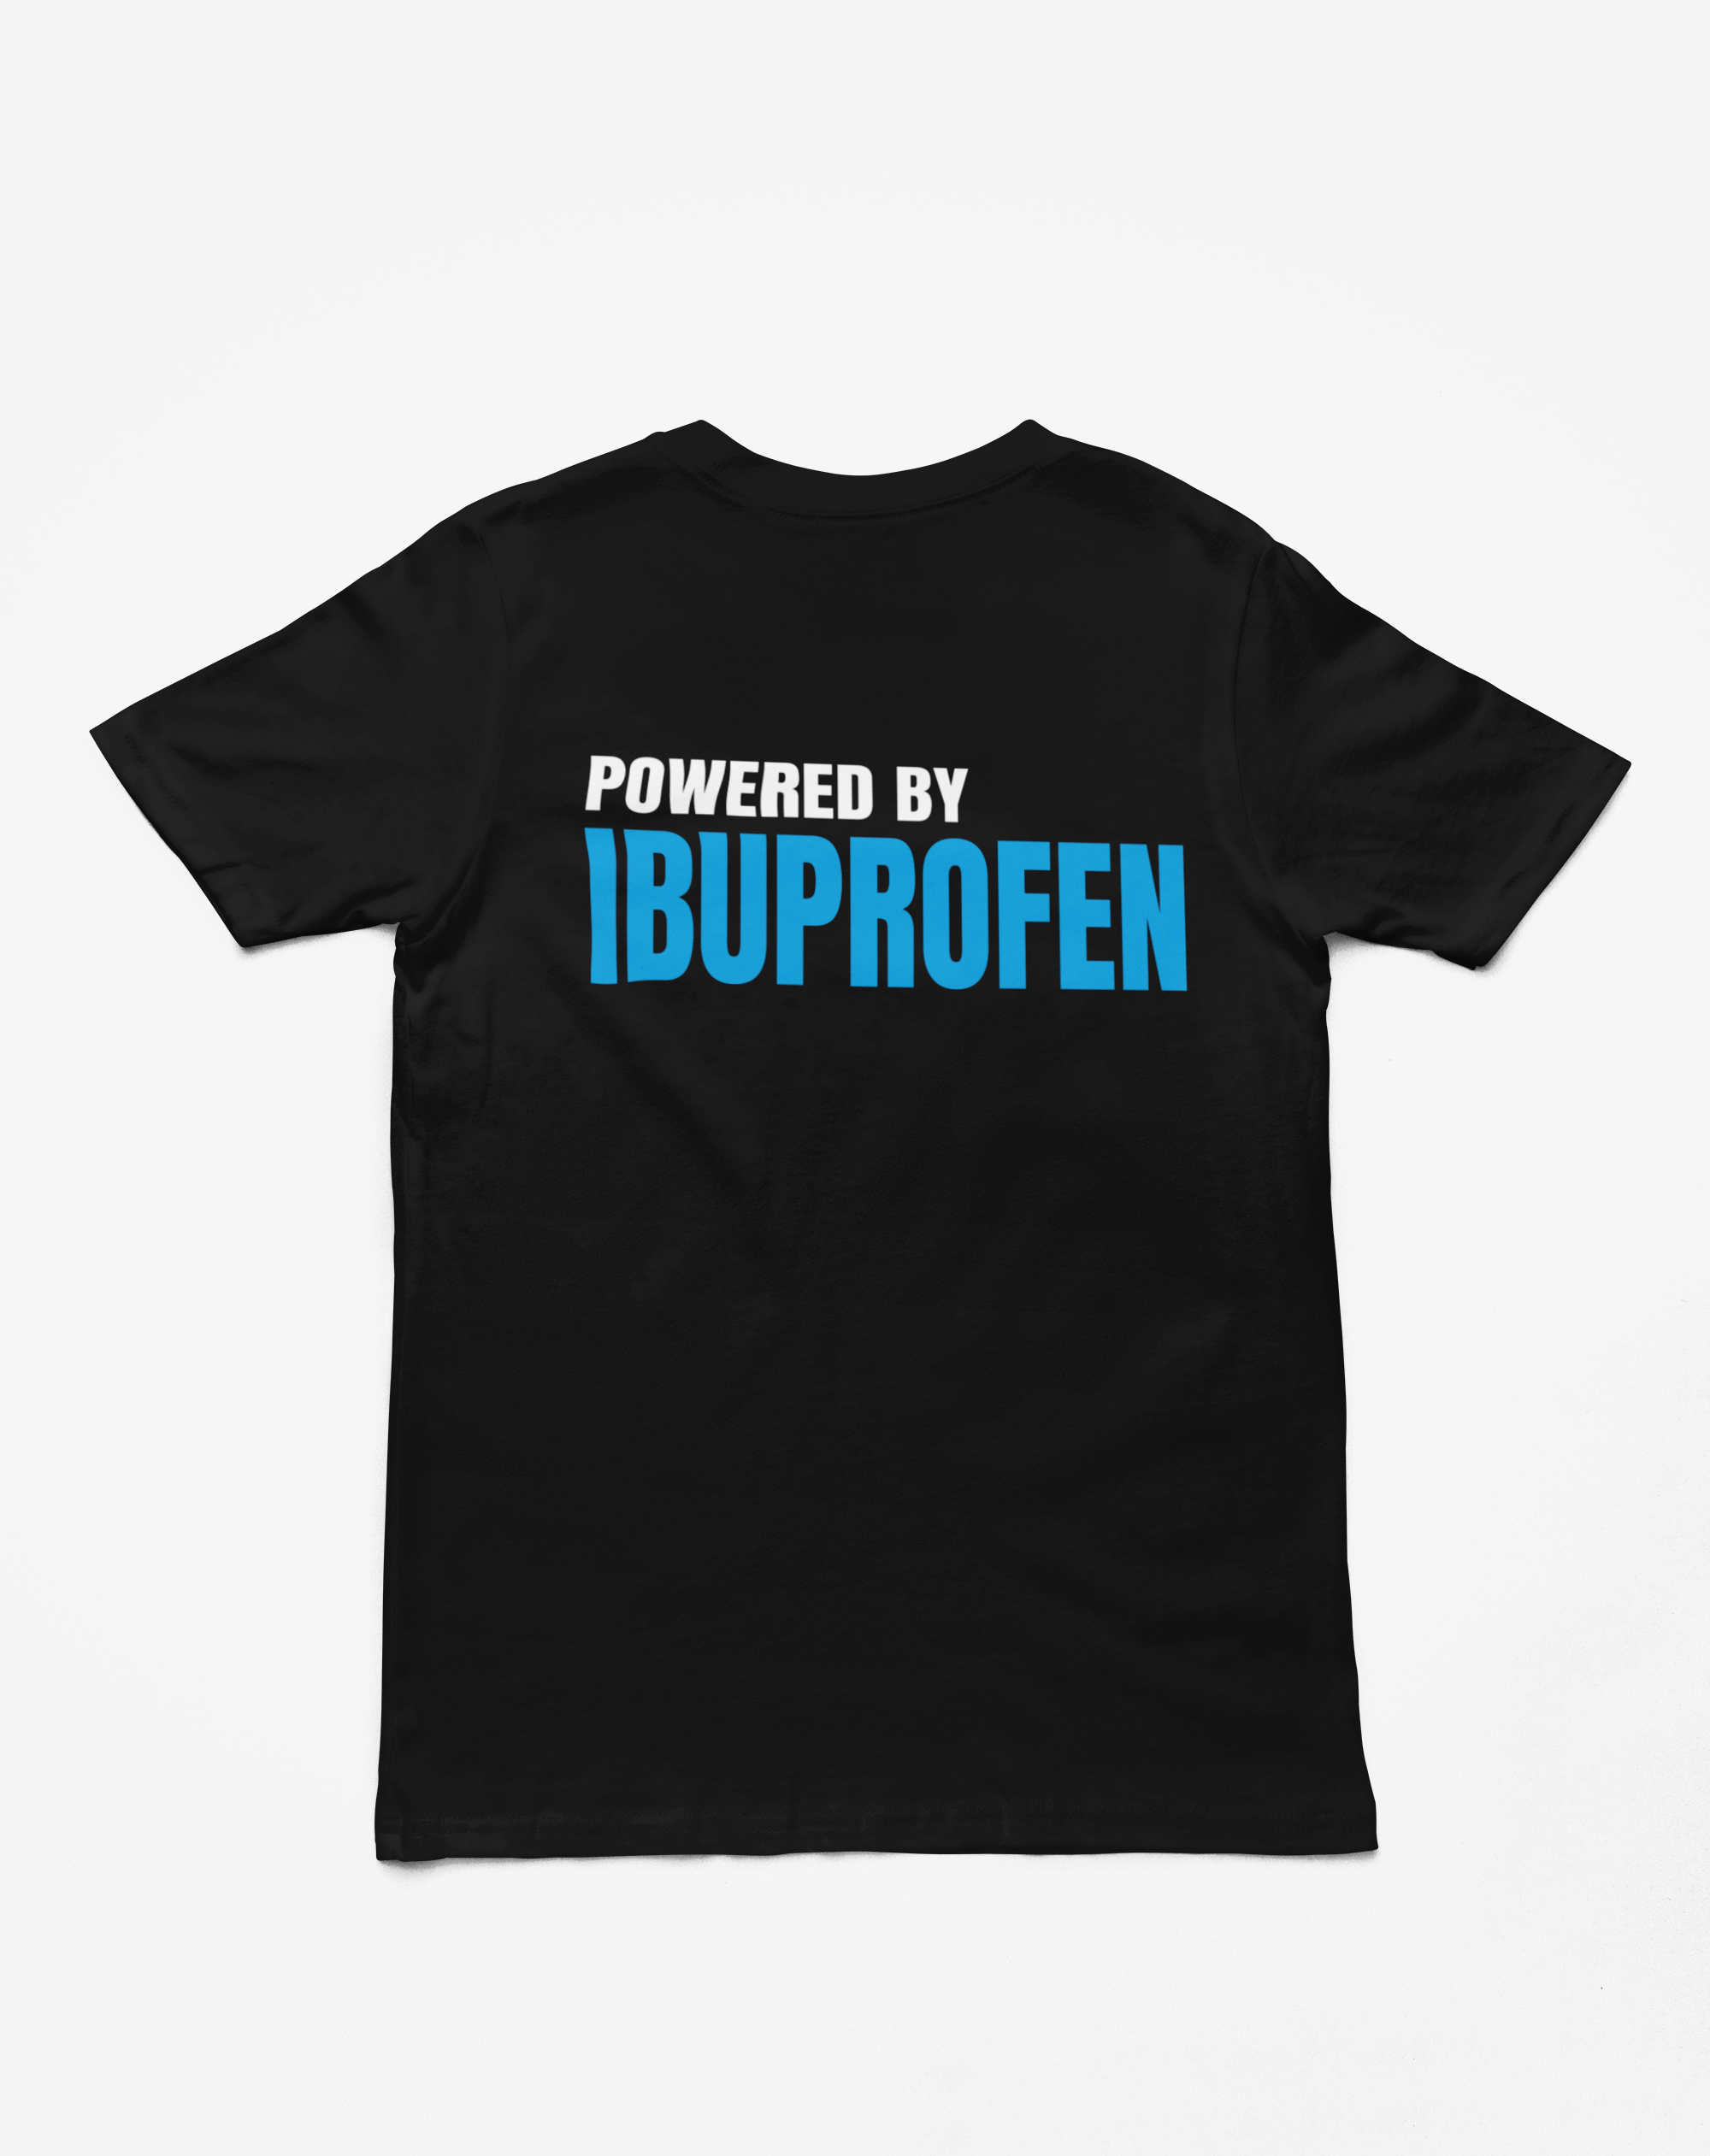 "Powered by Ibuprofen" T-Shirt